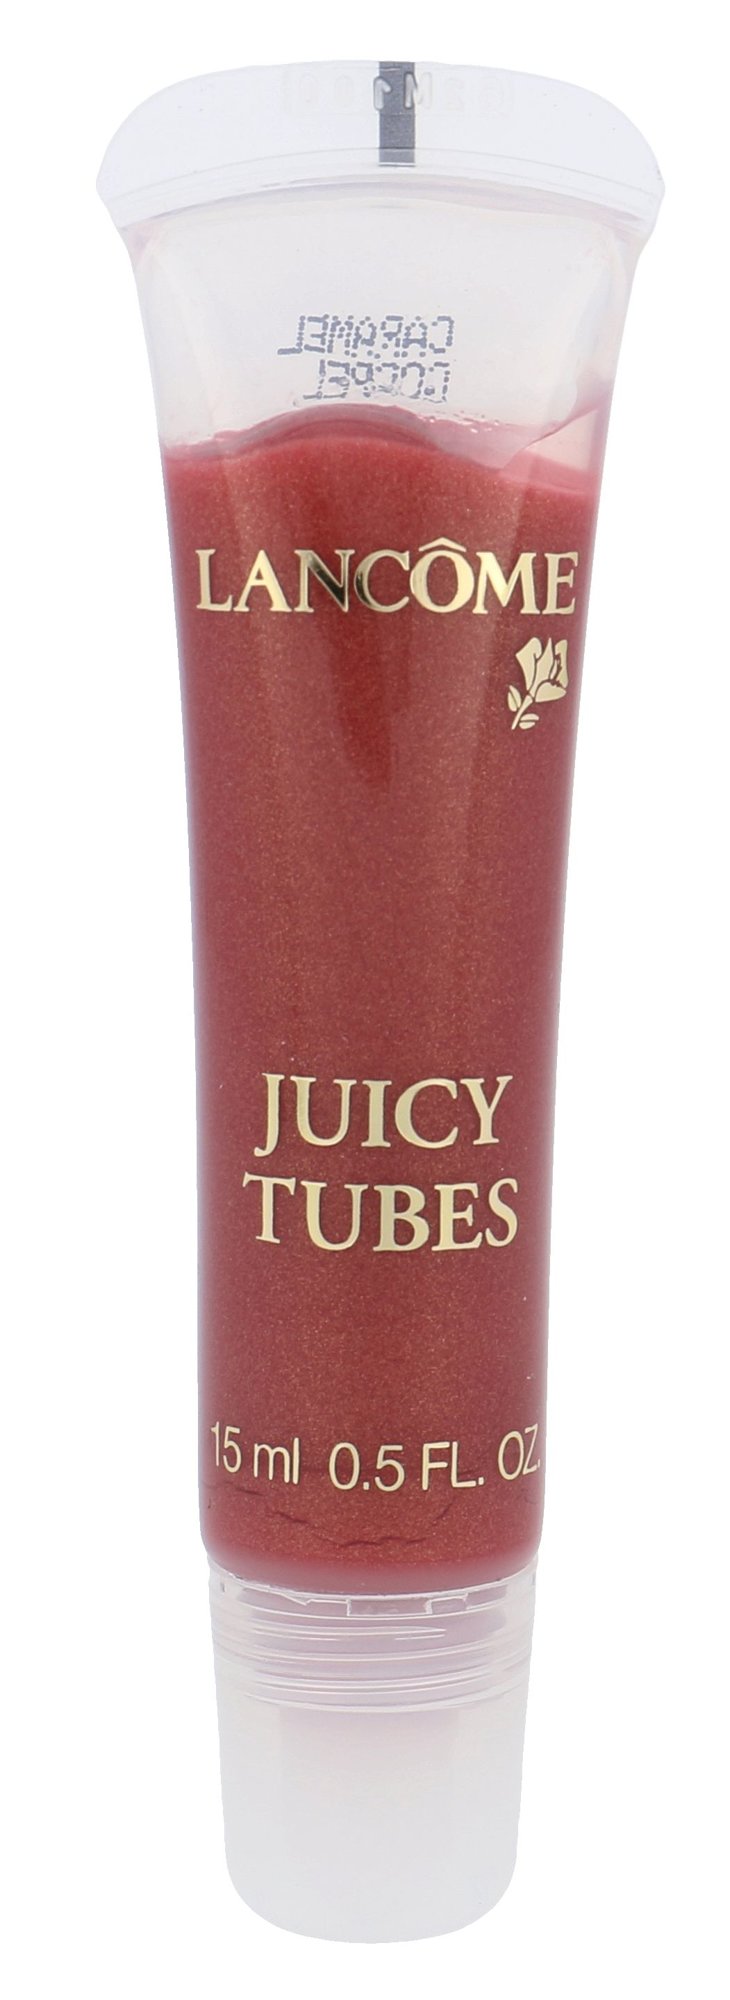 Lancome Juicy Tubes 15ml lūpų blizgesys (Pažeista pakuotė)